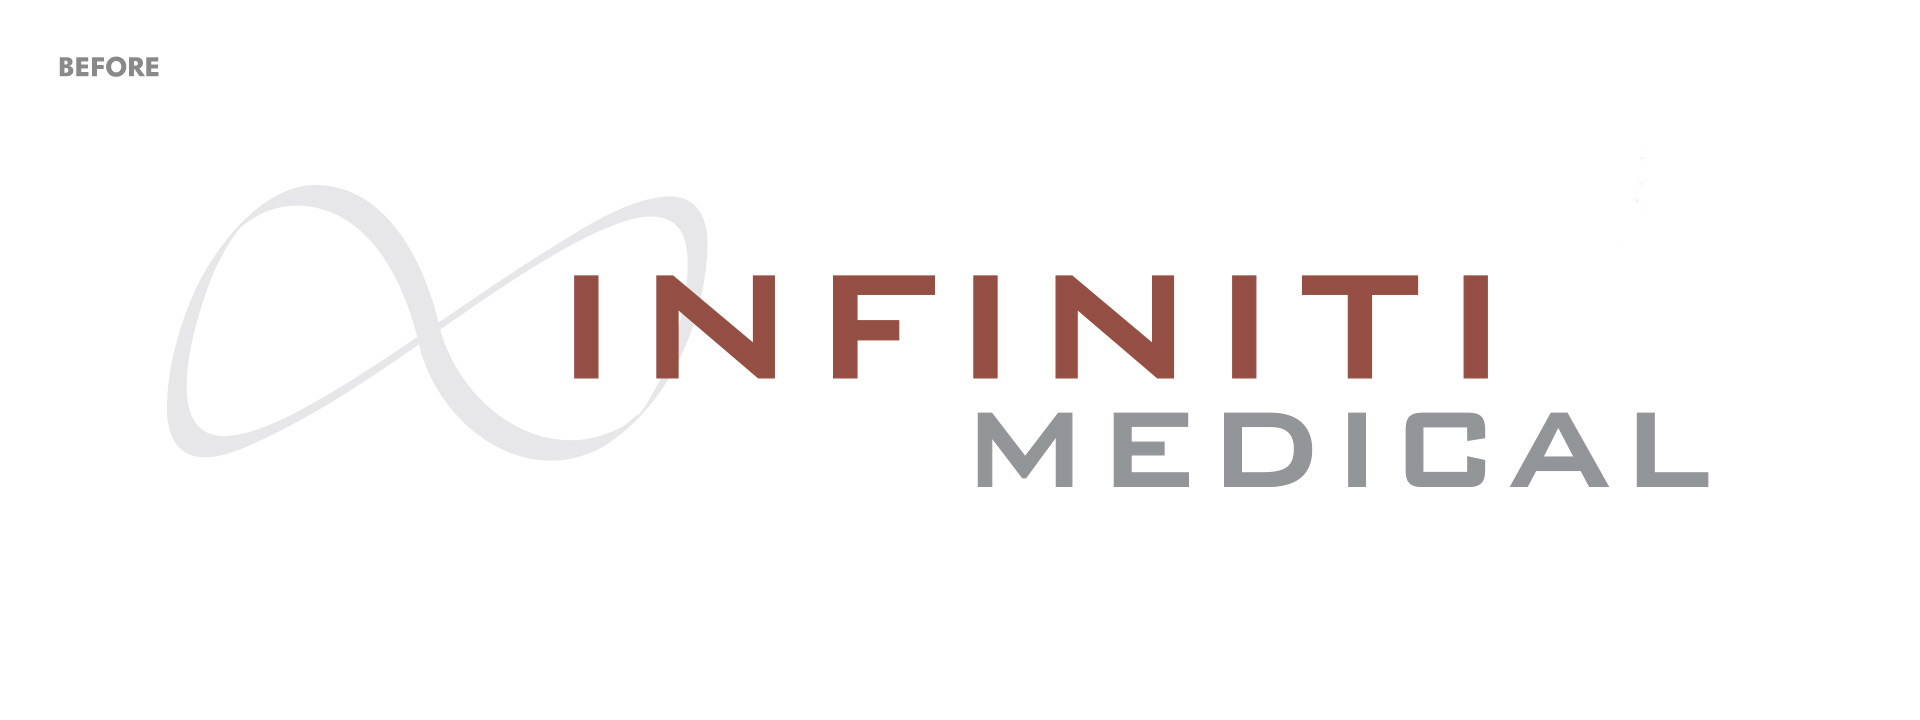 Infiniti_logo_before2